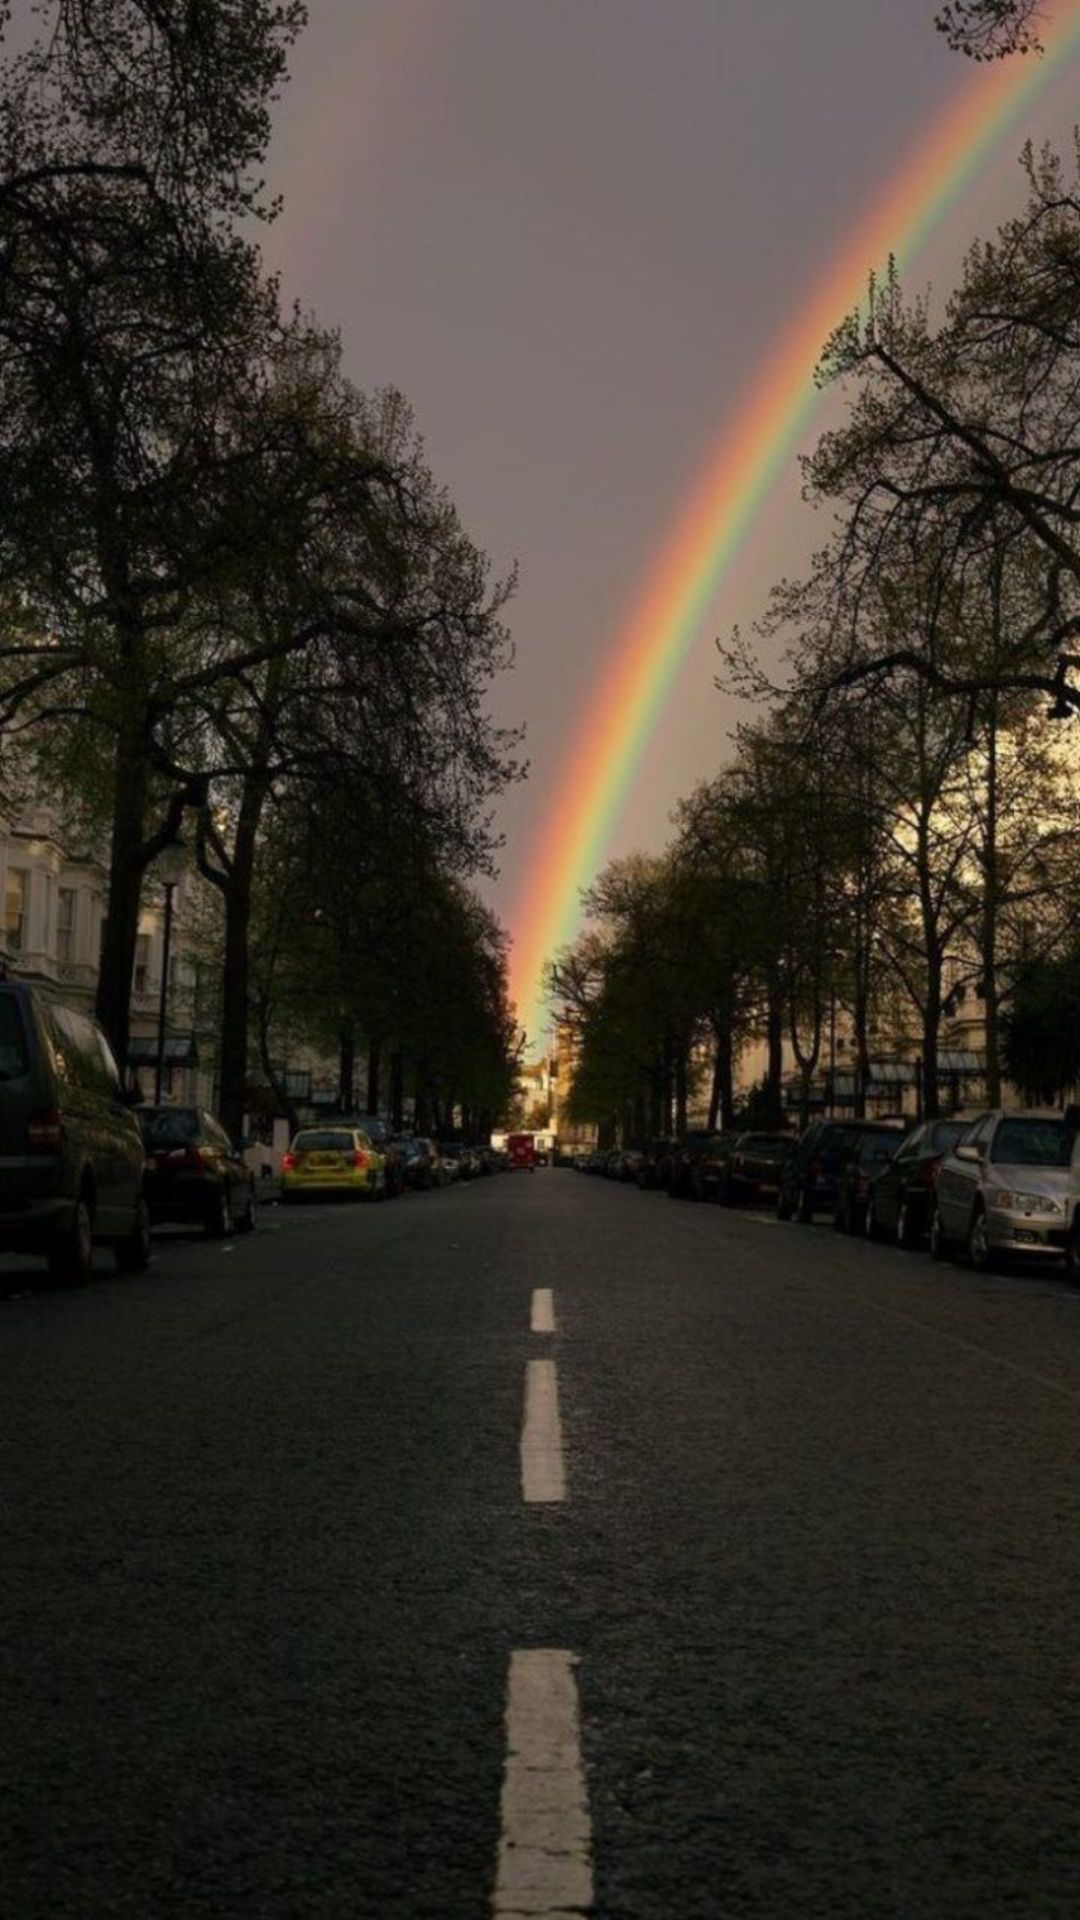 Rainbow over the road - Rainbows